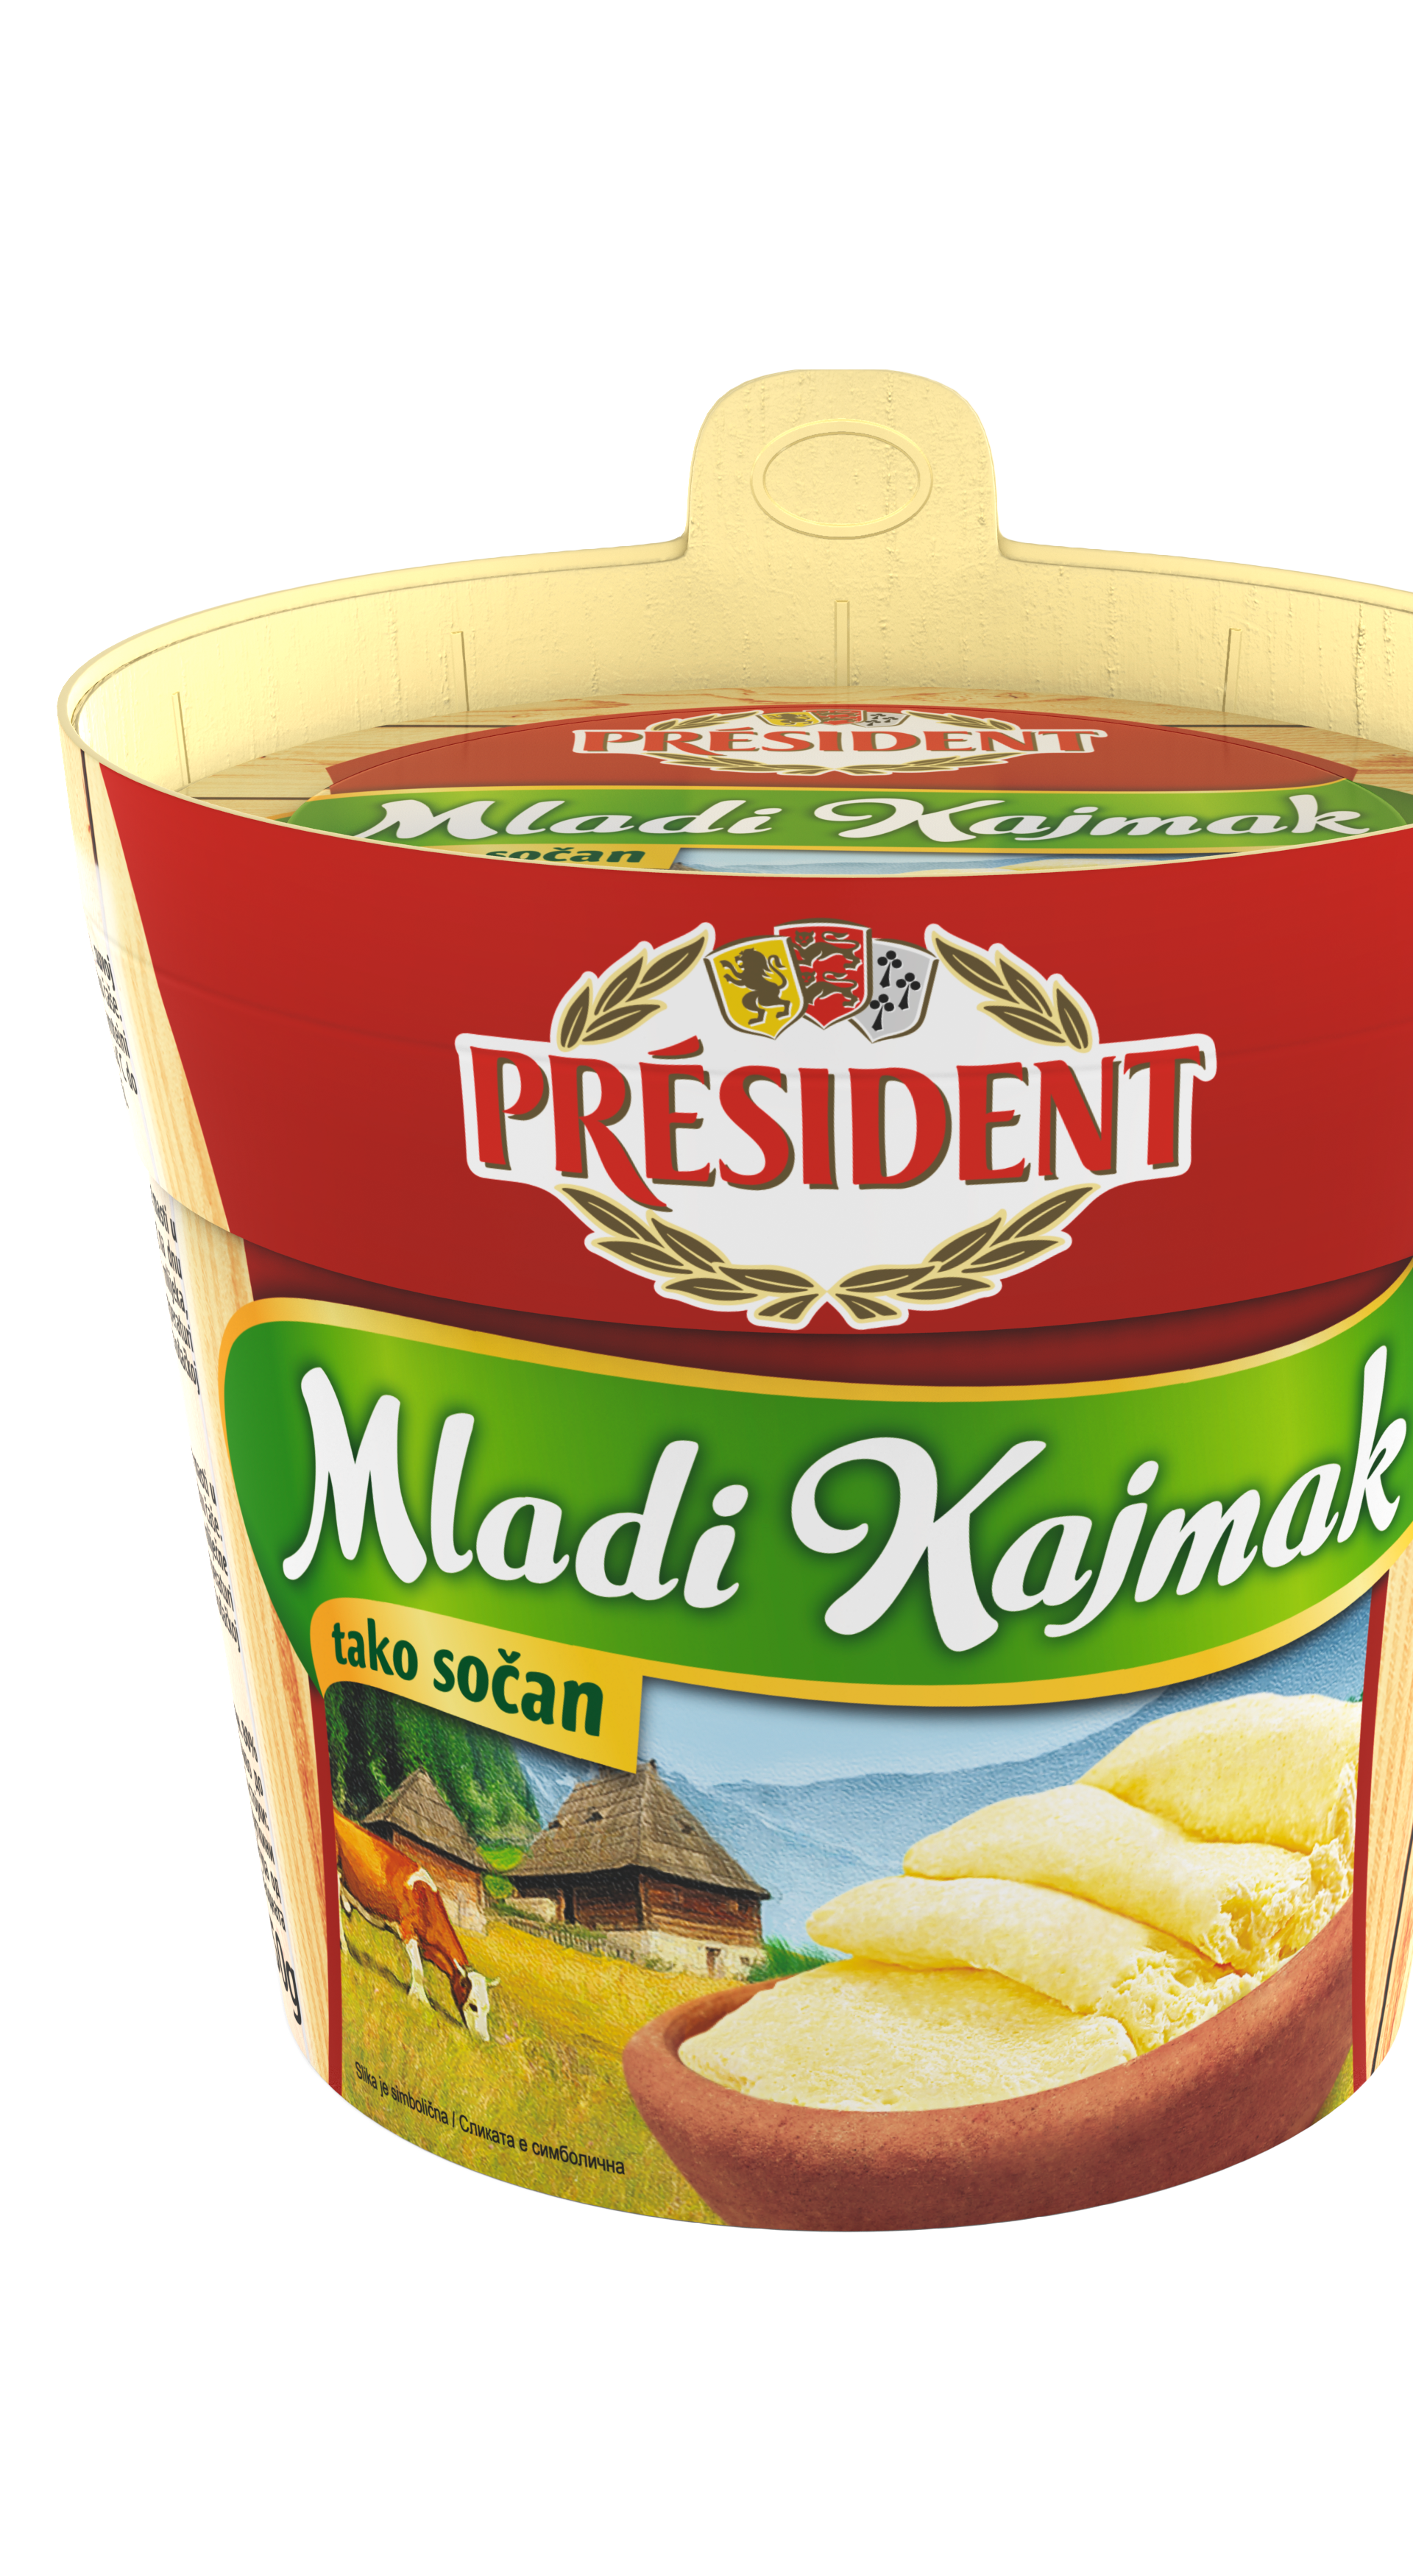 President Kajmak – prvi Mladi kajmak na tržištu